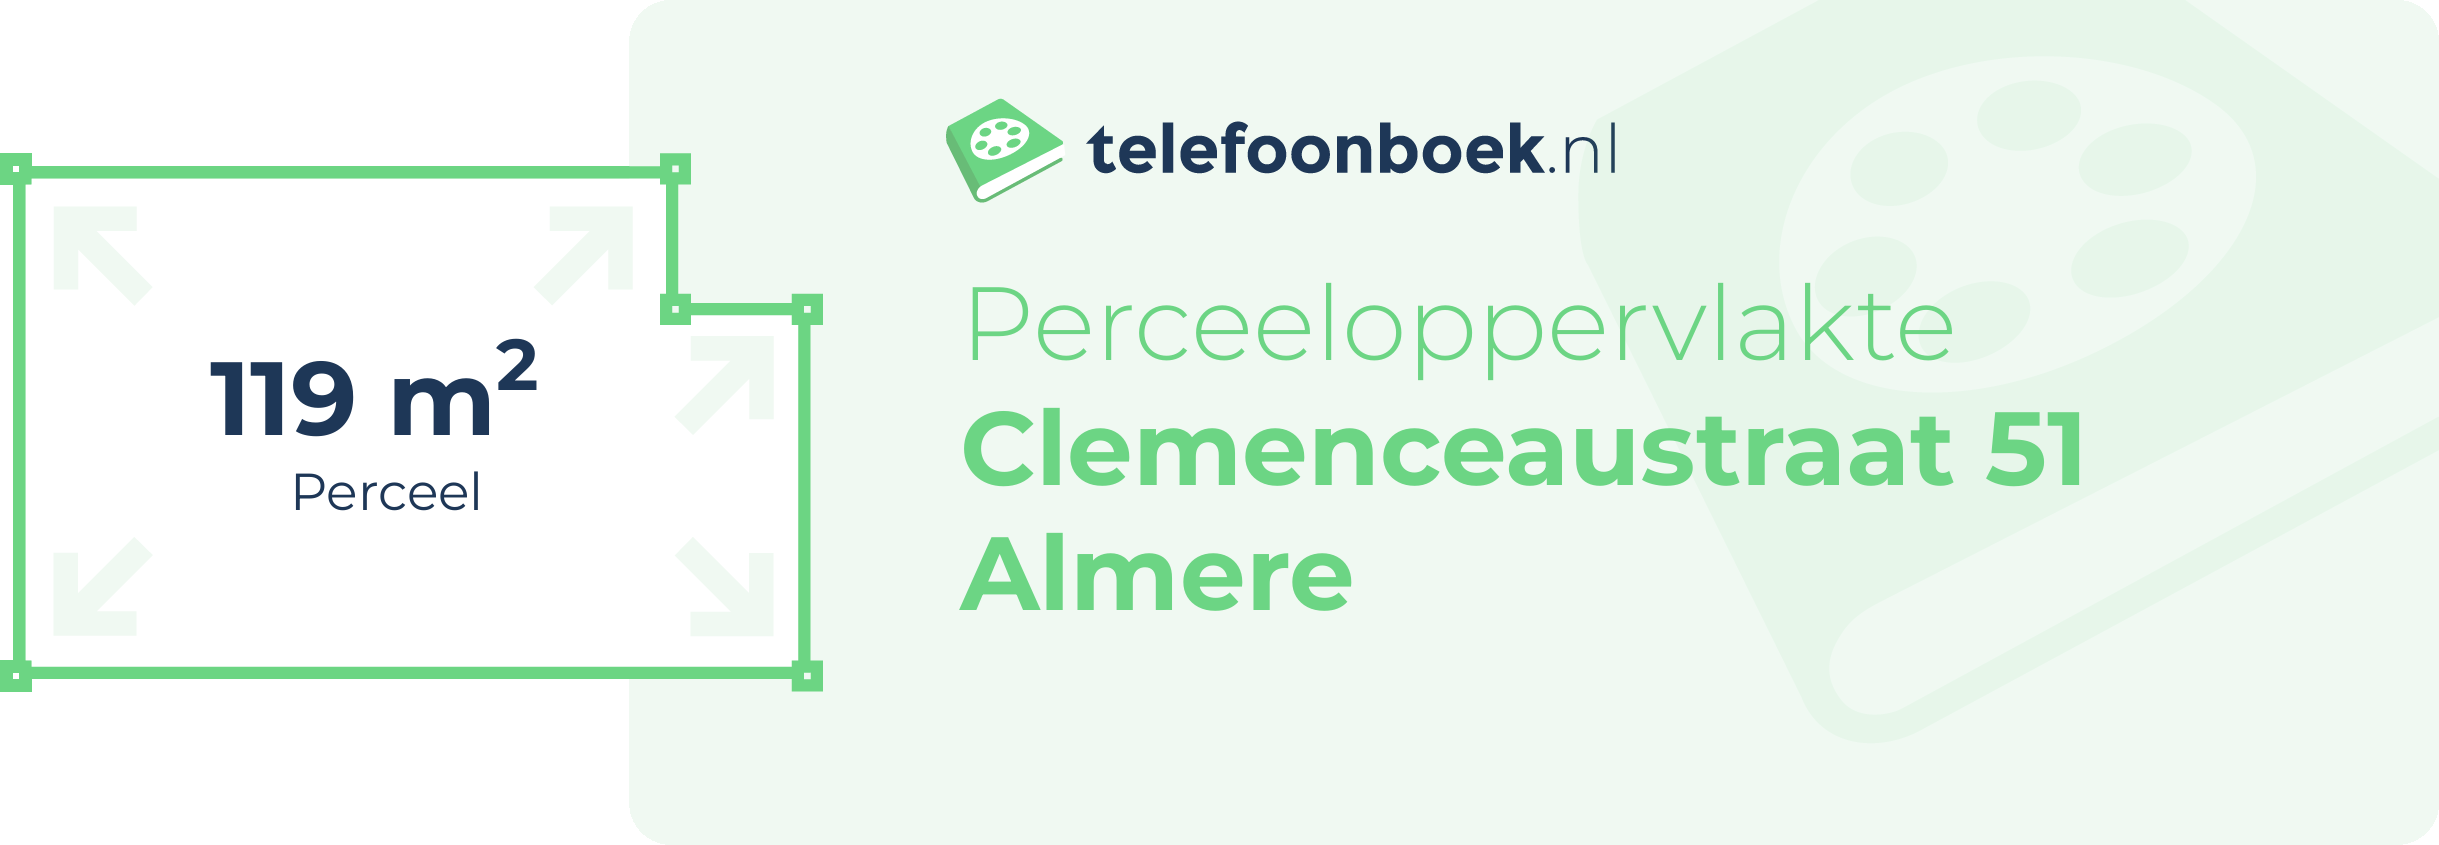 Perceeloppervlakte Clemenceaustraat 51 Almere